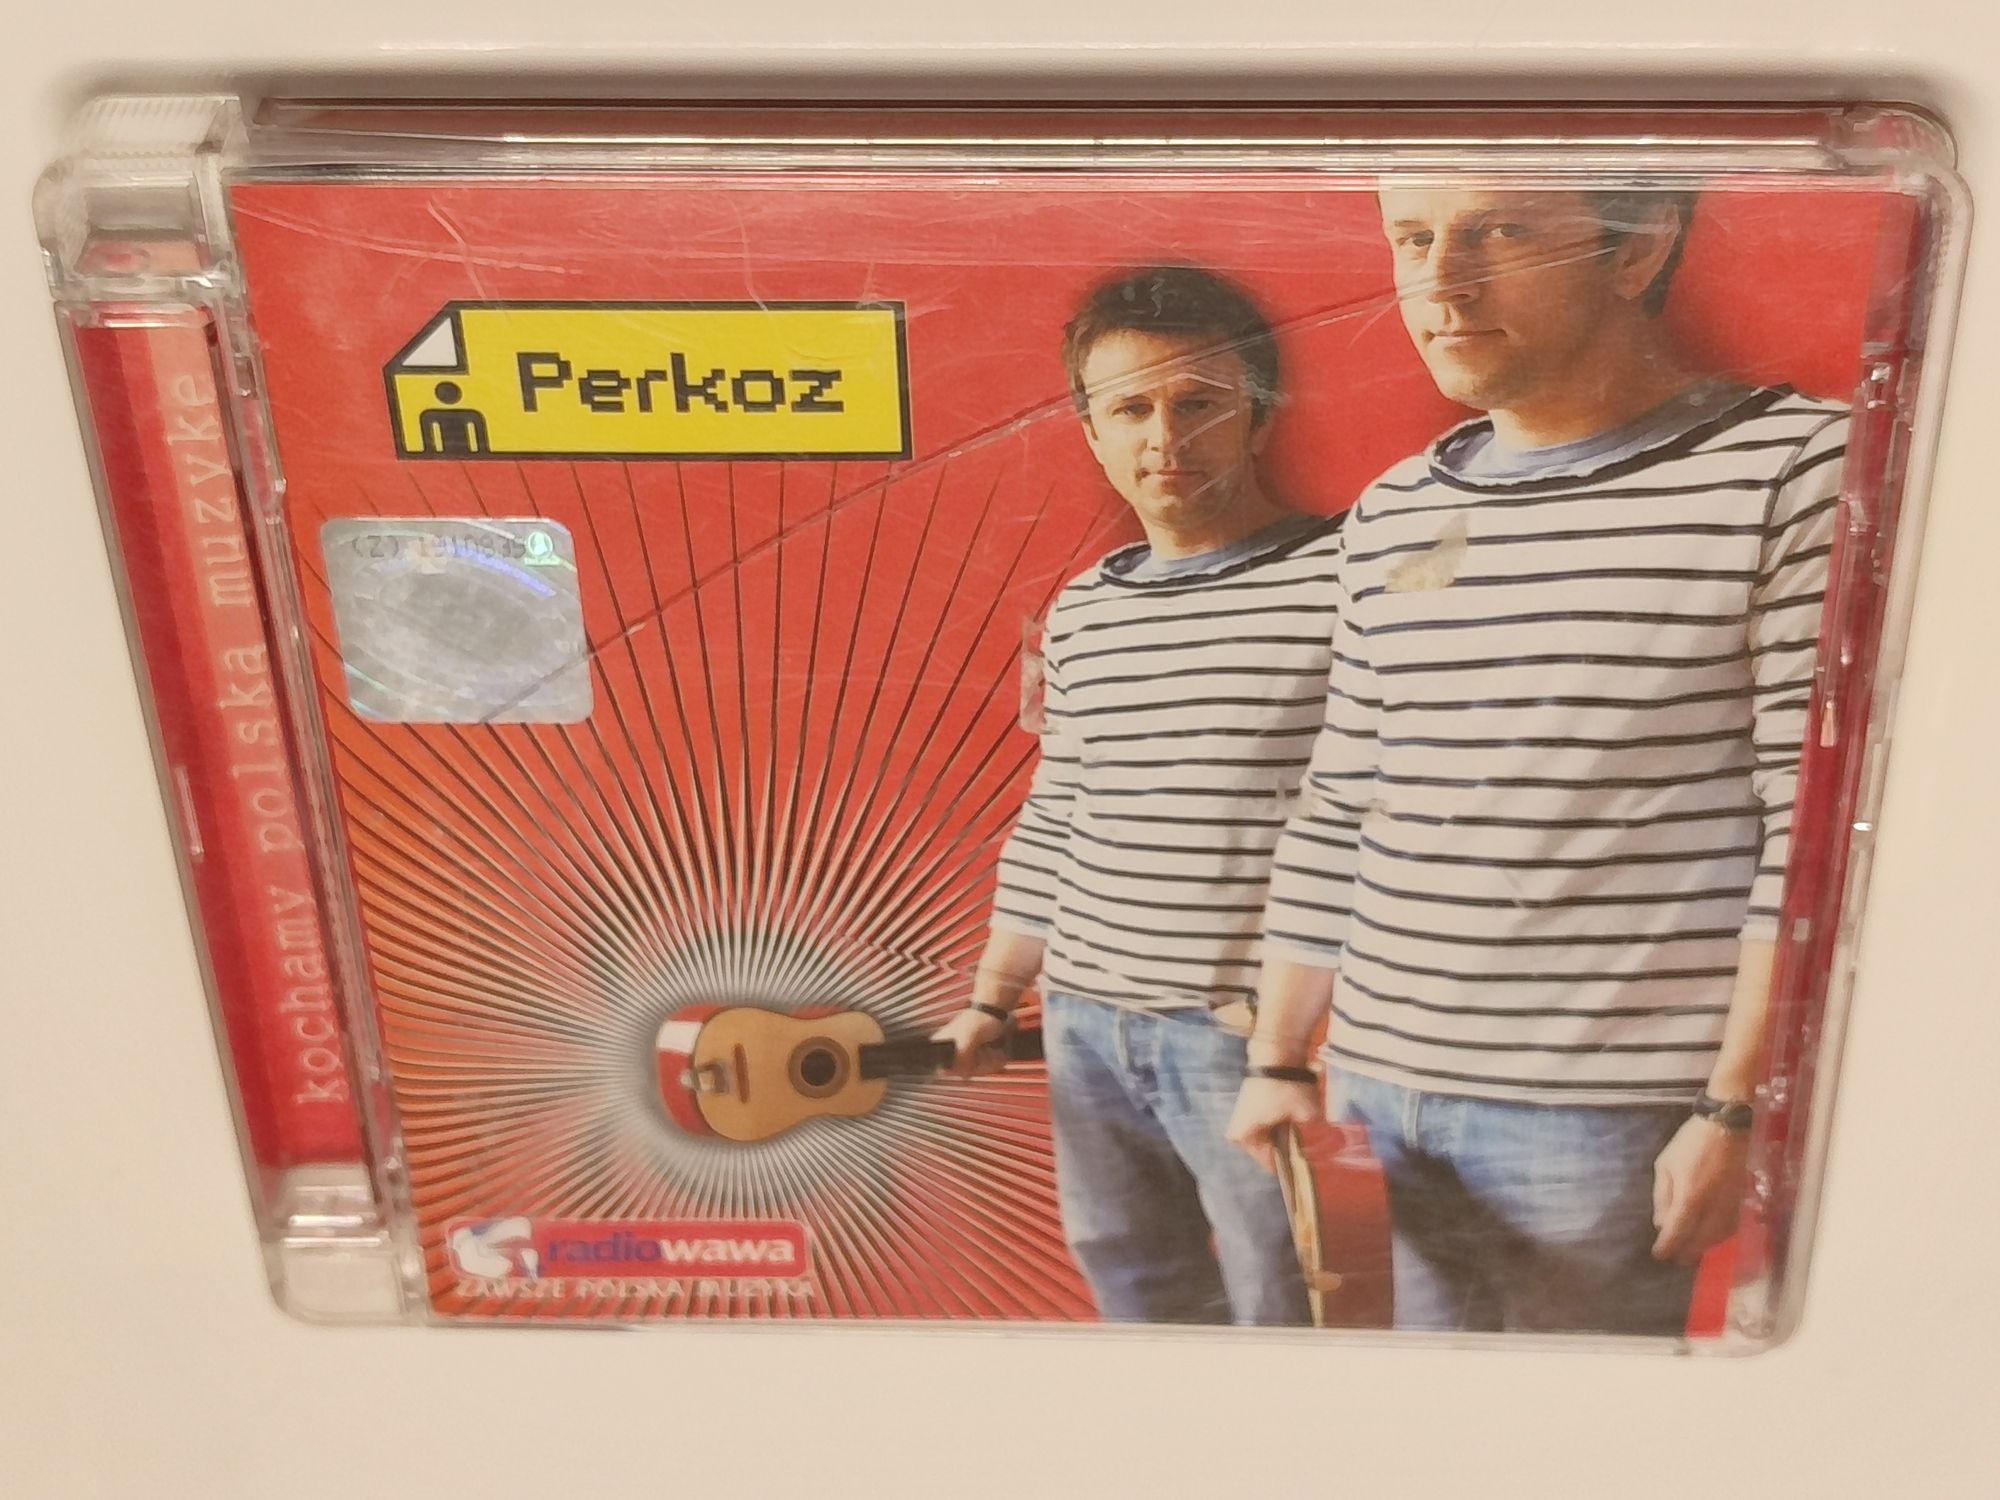 Perkoz Perkowski T.Love, DeMono 2005 CD 10/10